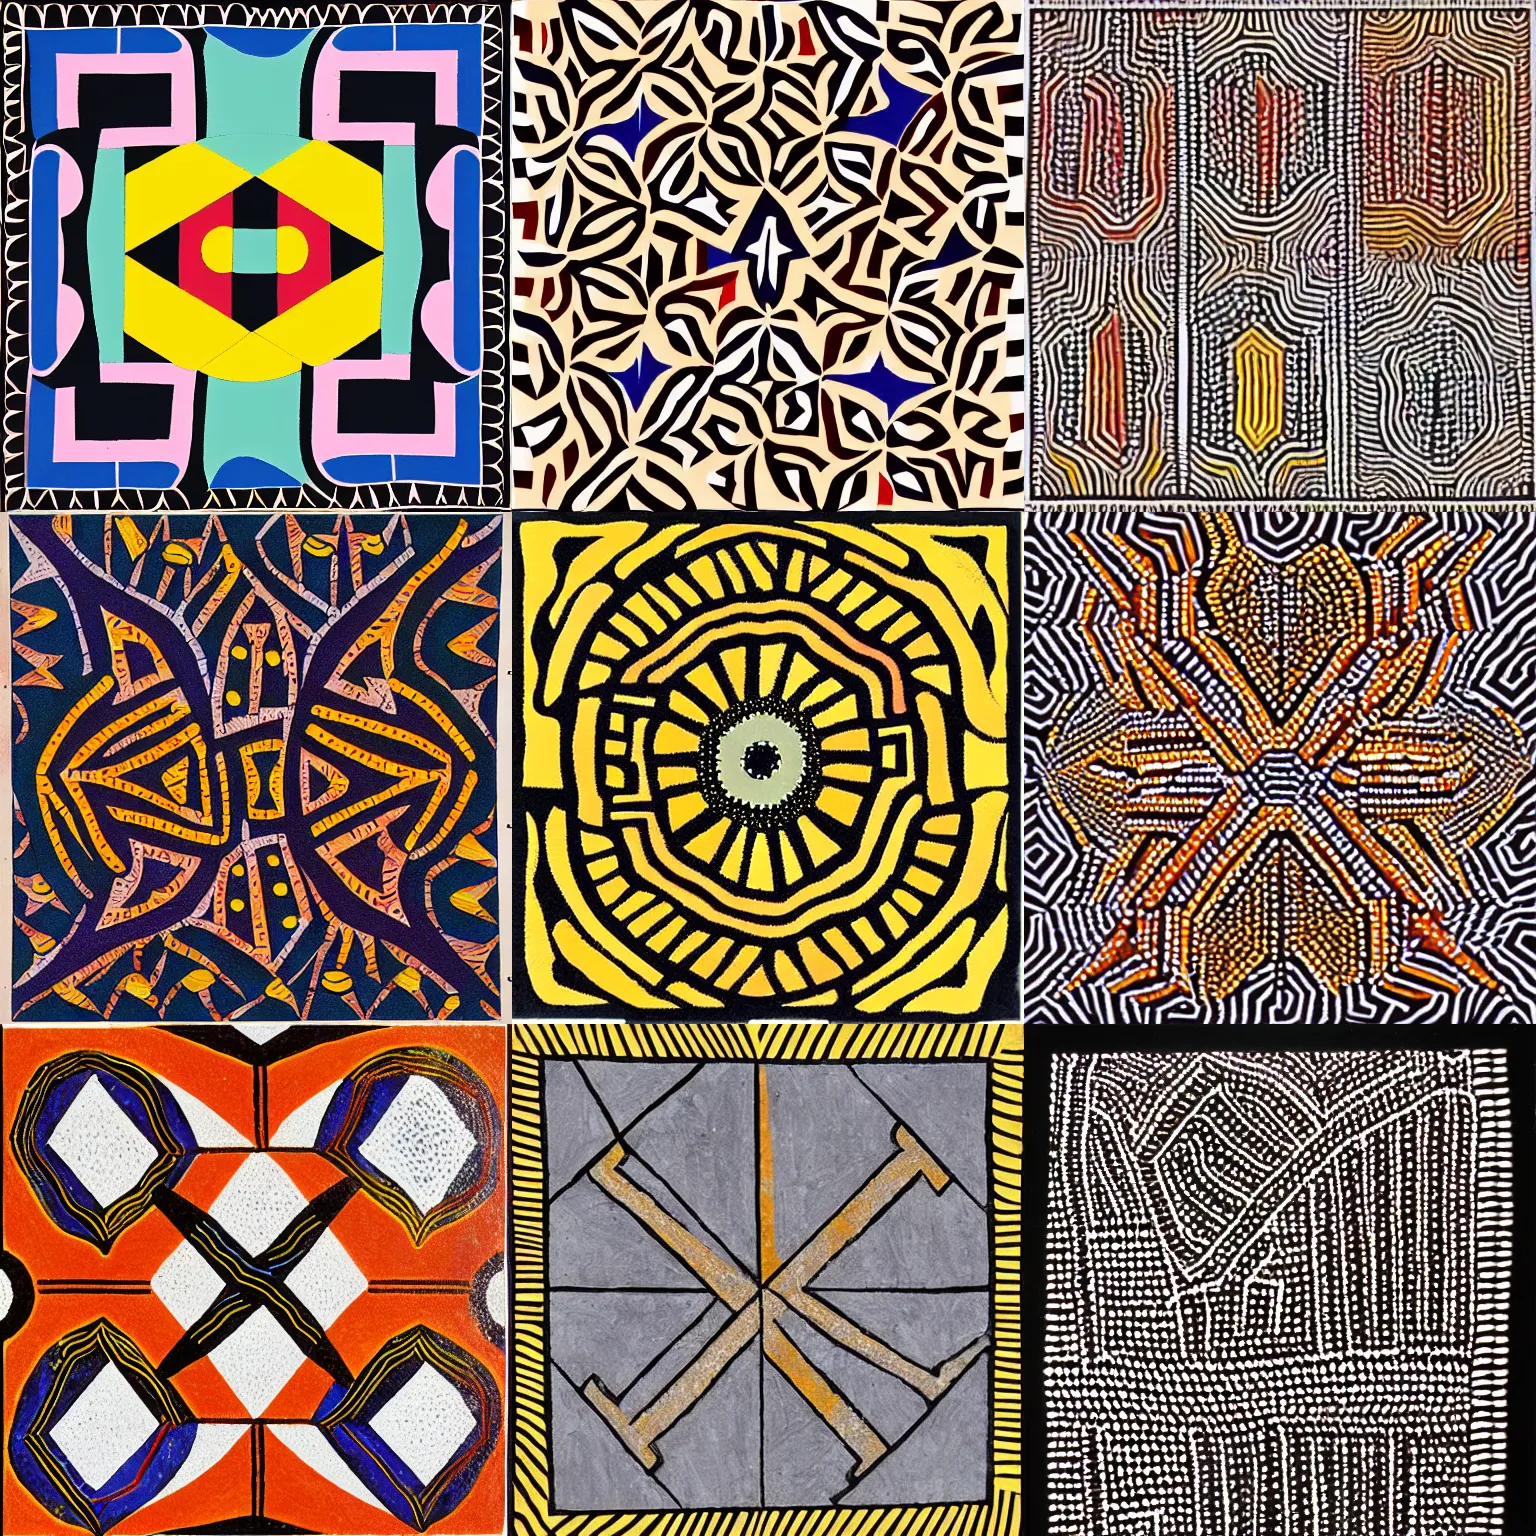 Prompt: aboriginal art of a geometric pattern